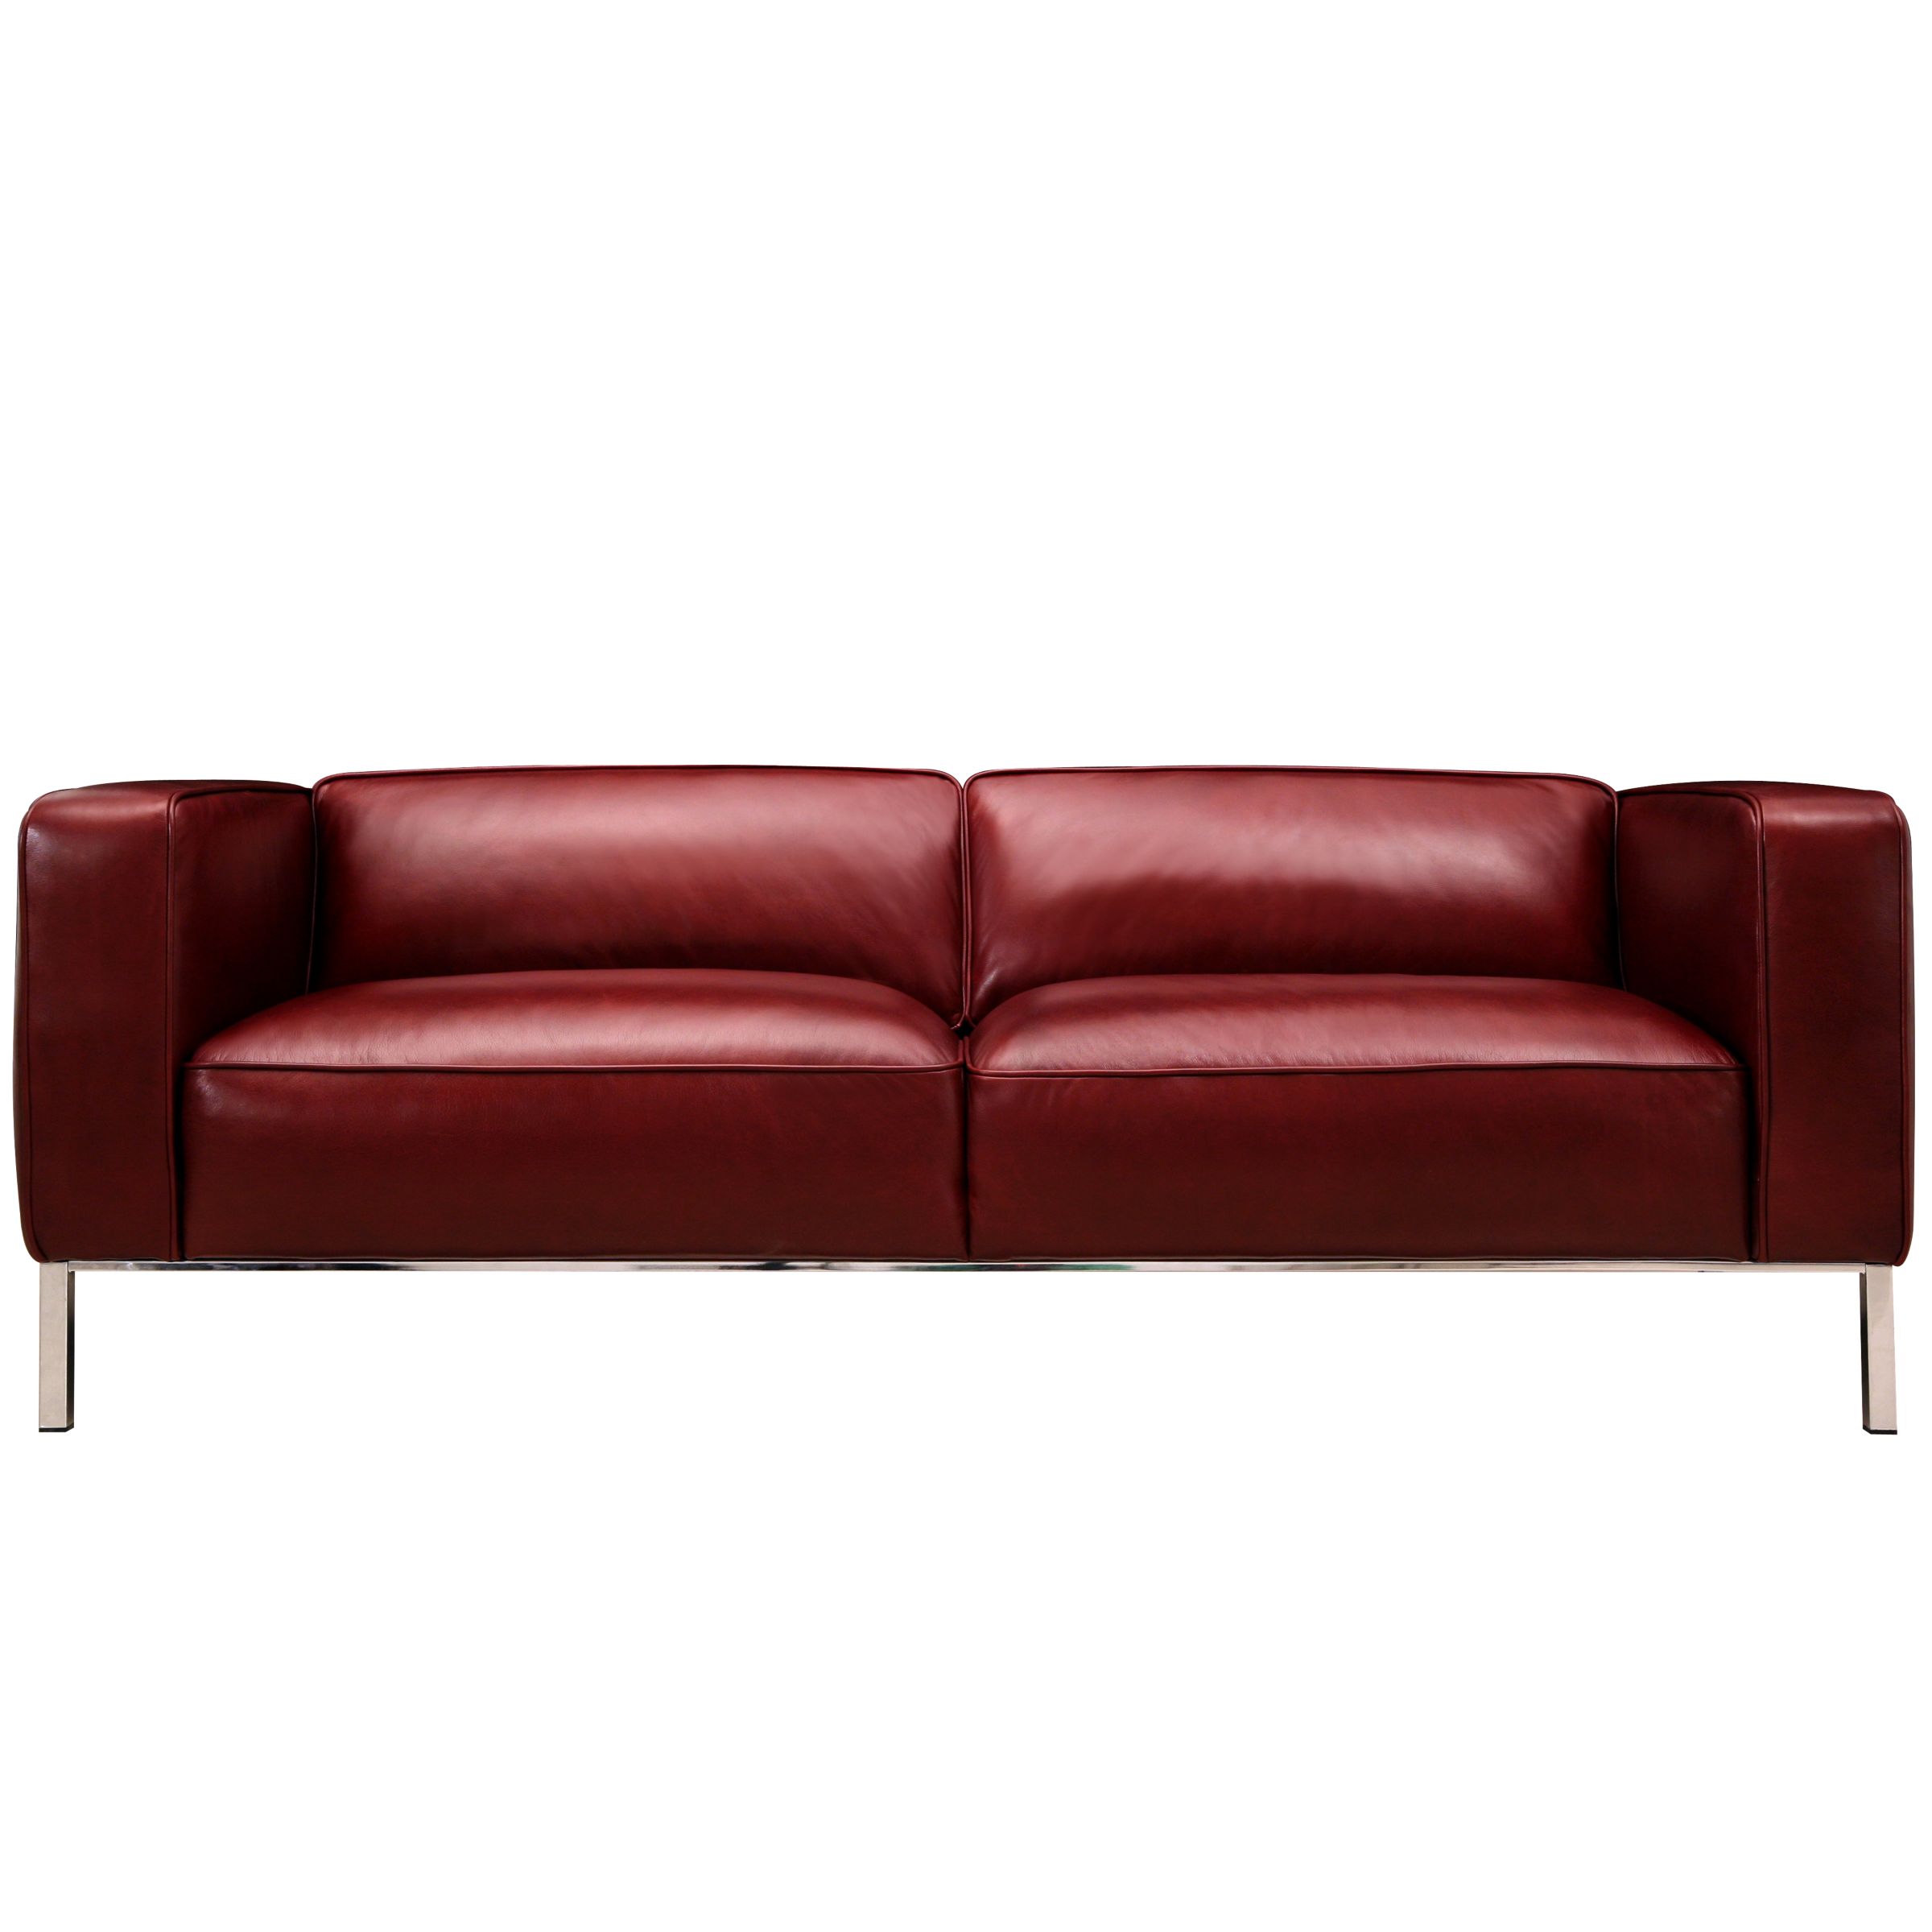 John Lewis Lloyd Grand Leather Sofa, Grenadine at JohnLewis